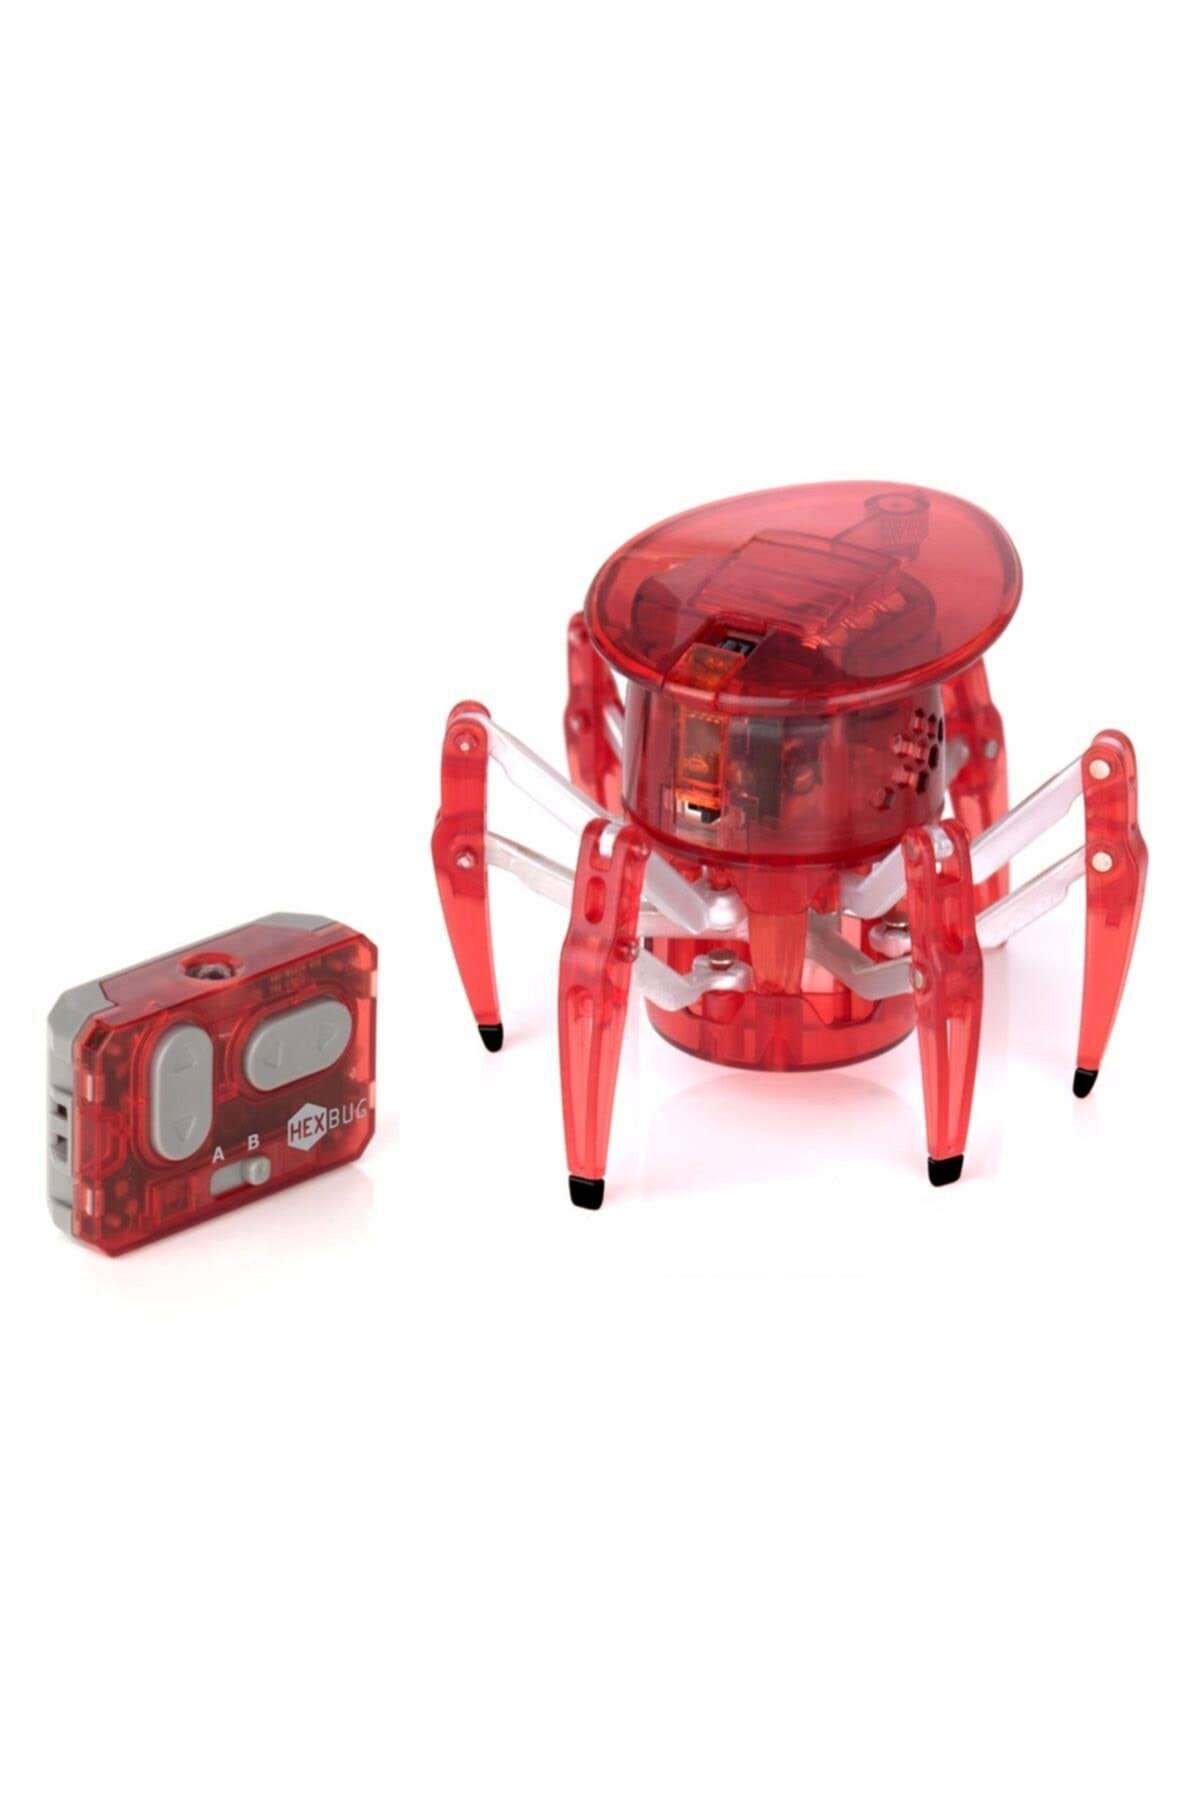 Hexbug Robotic Spider - Aqua